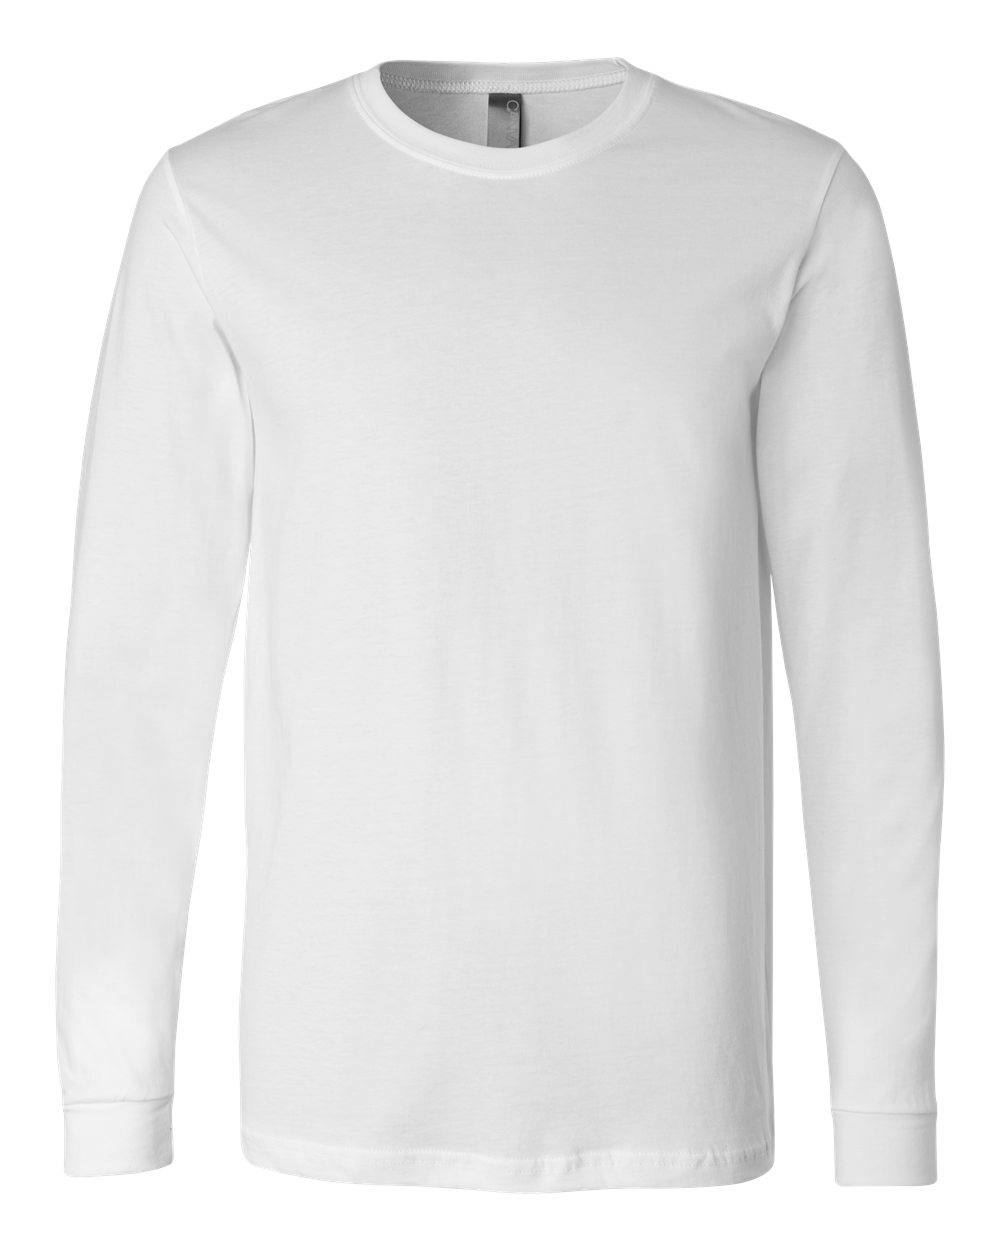 Unisex Jersey Long Sleeve Tee - BELLA + CANVAS 3501 | Clothing Shop Online